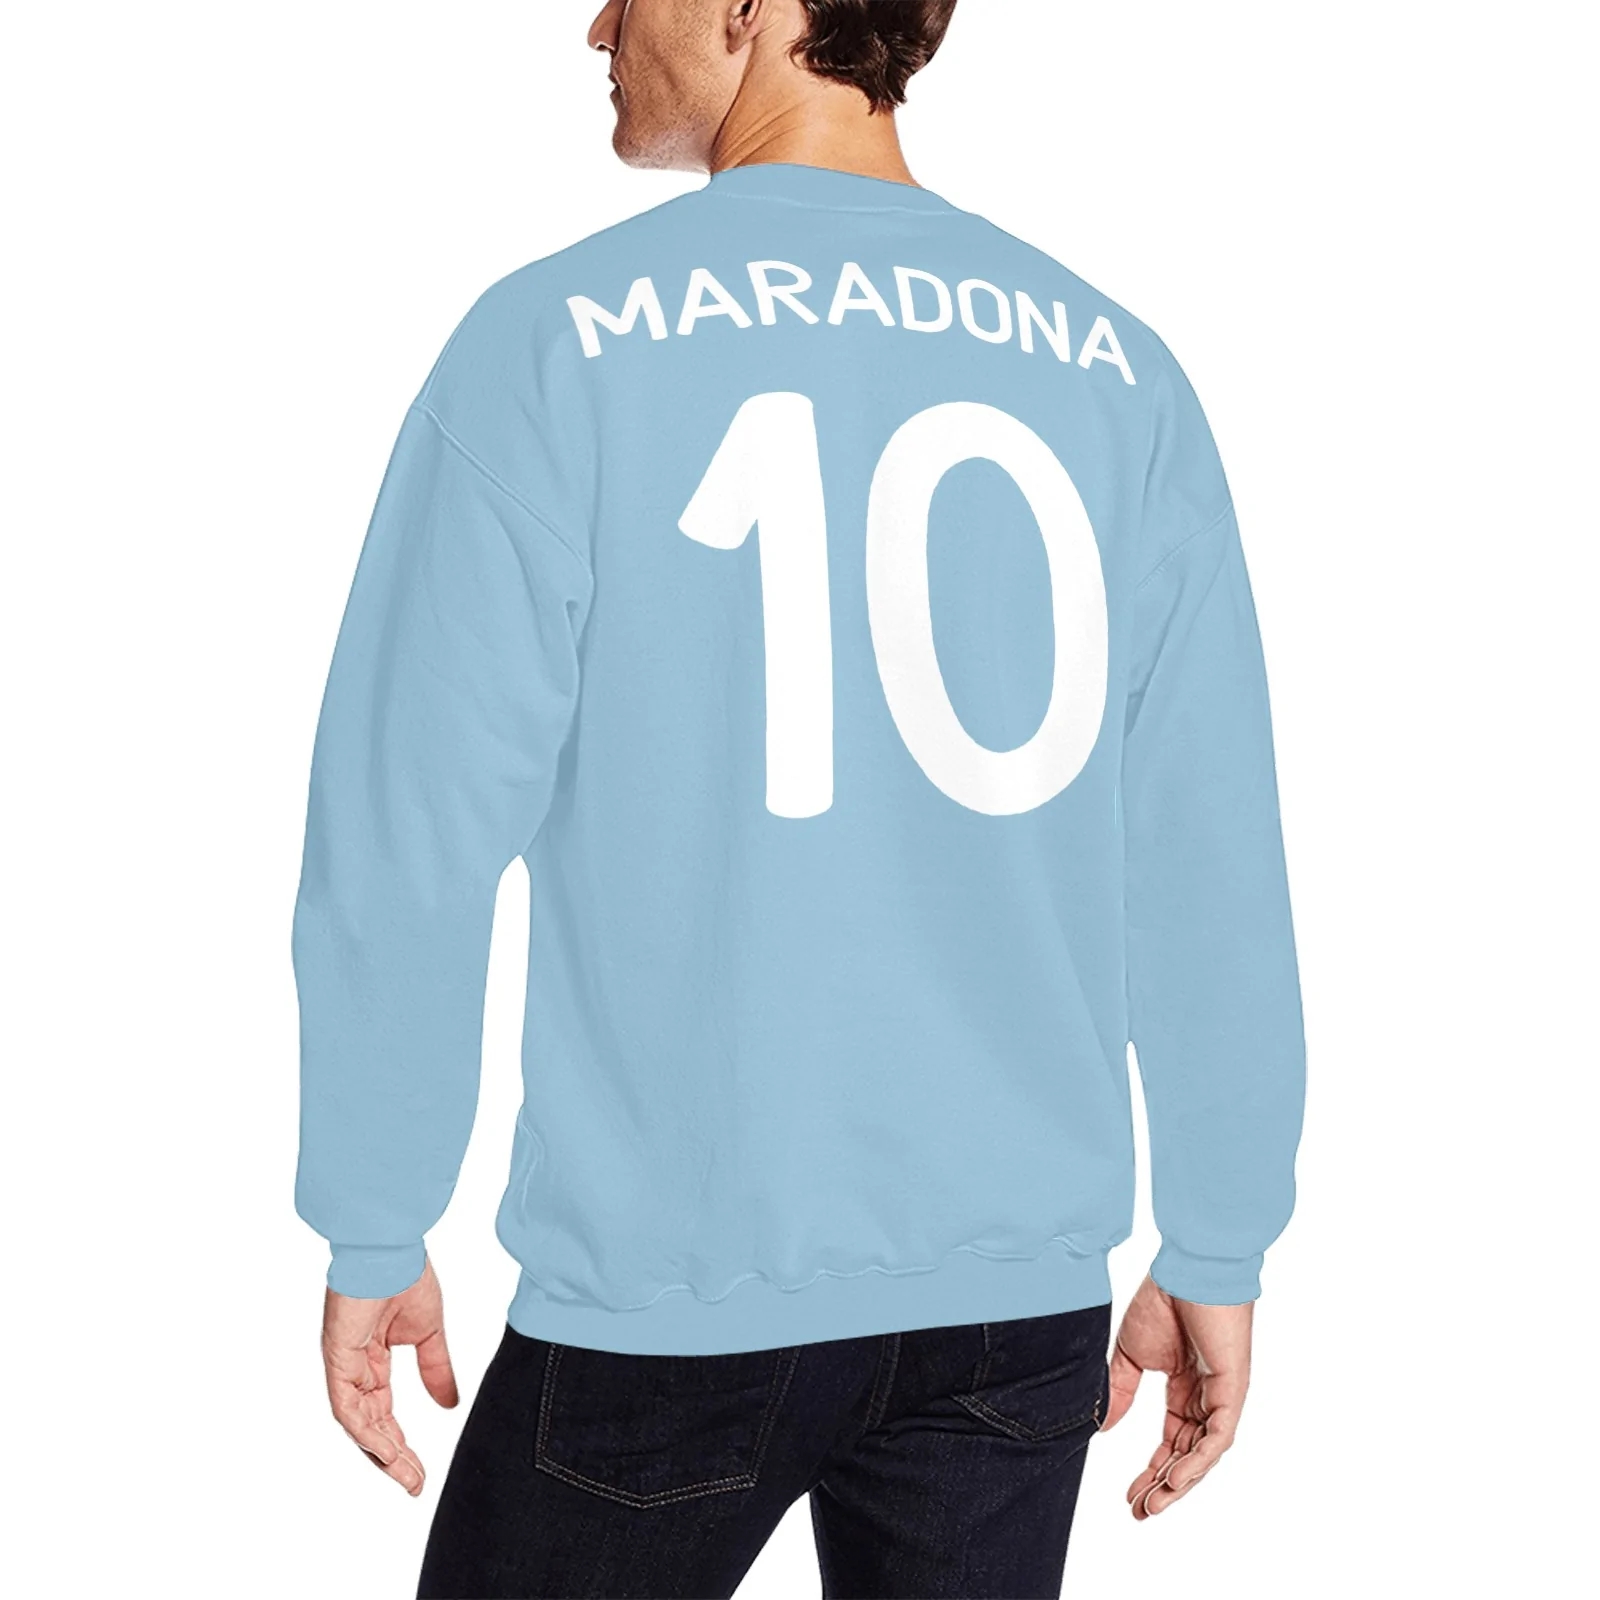 Napoli 1987 1988 Maradona 10 Home Shirt Campioni Long Sleeve